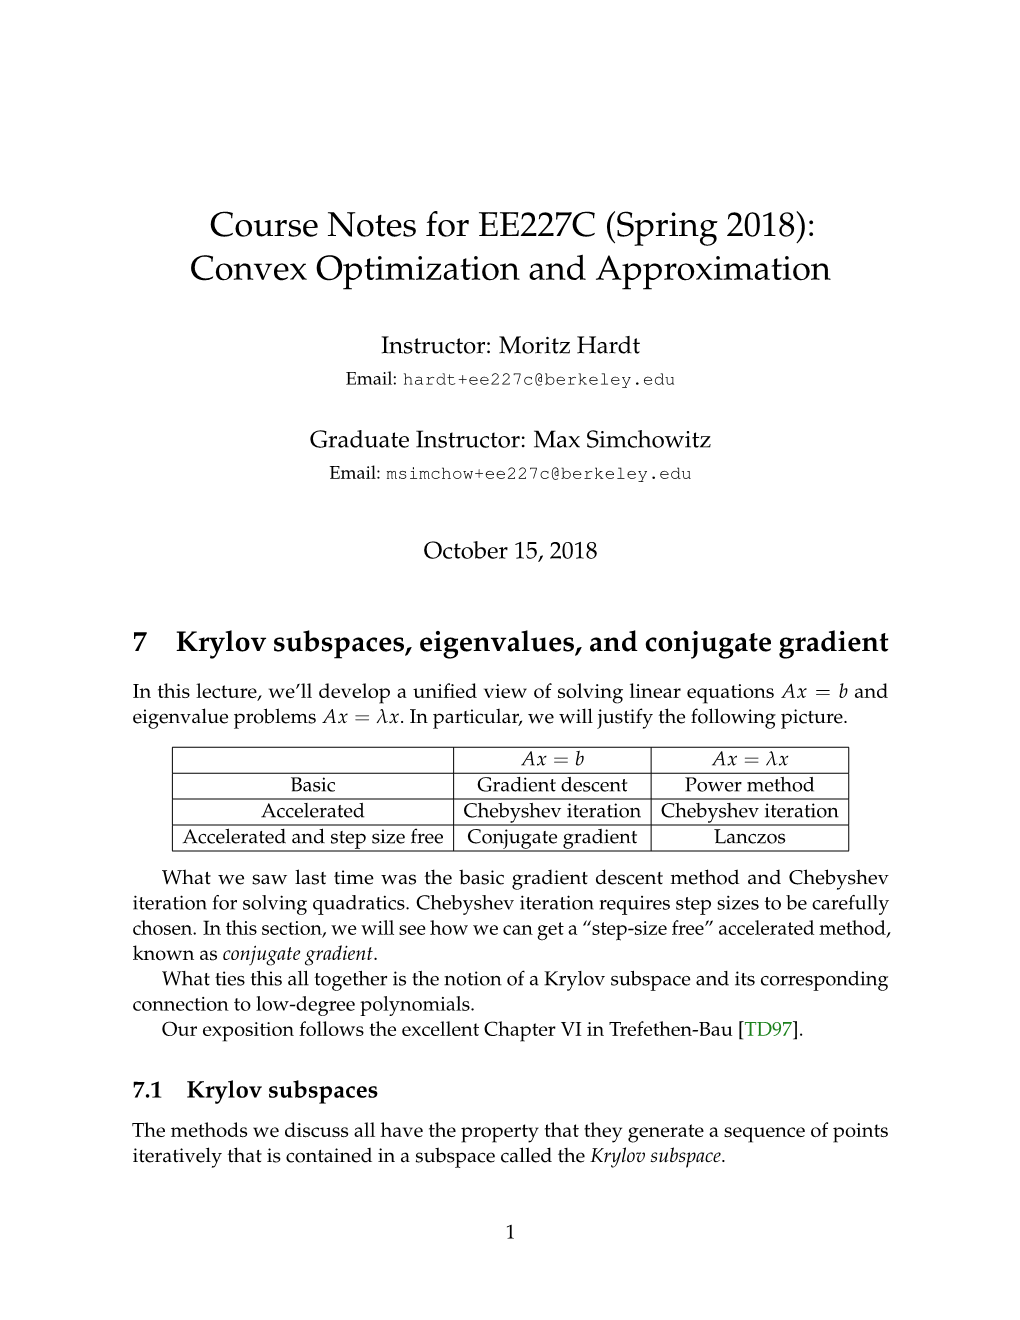 7 Krylov Subspaces, Eigenvalues, and Conjugate Gradient